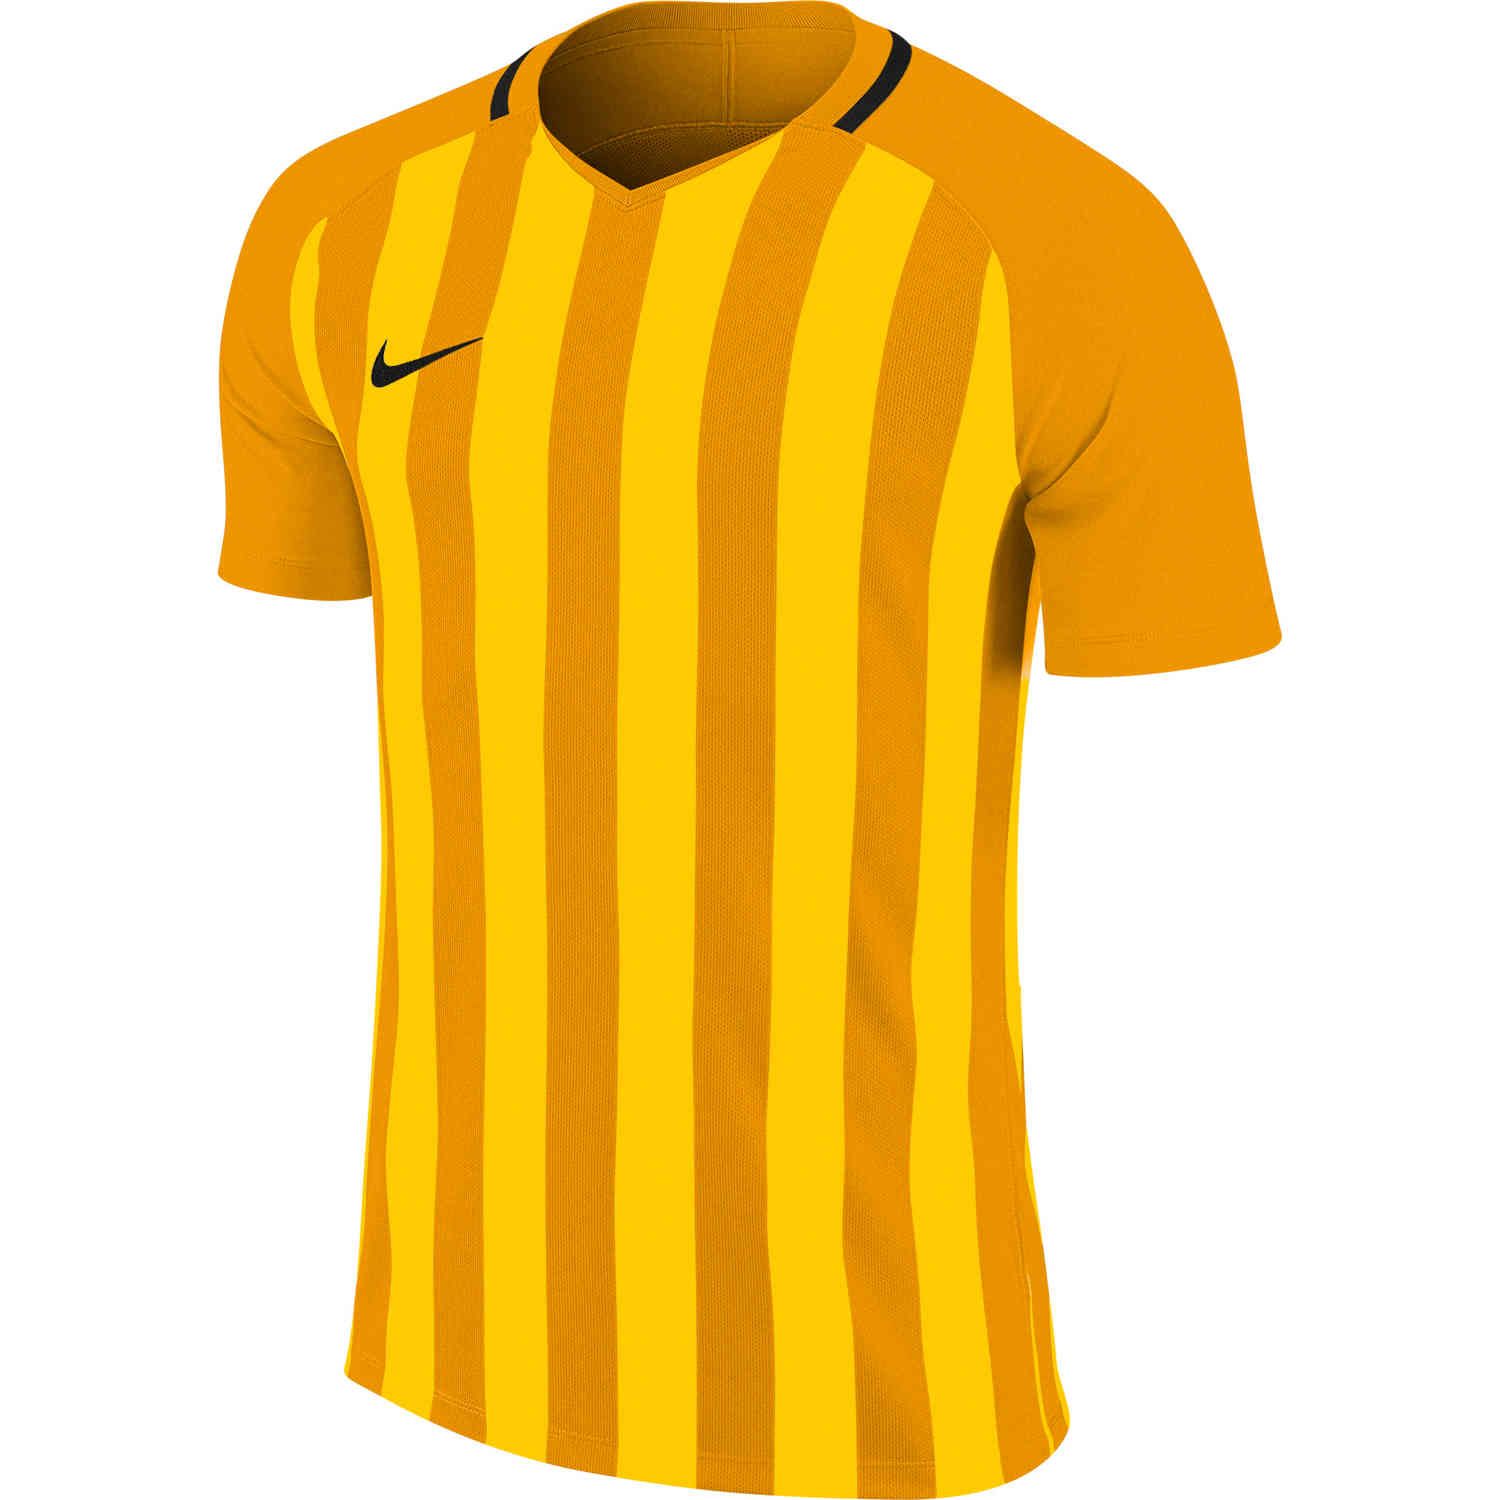 Nike Striped Division III Jersey - University Gold/Tour Yellow - SoccerPro